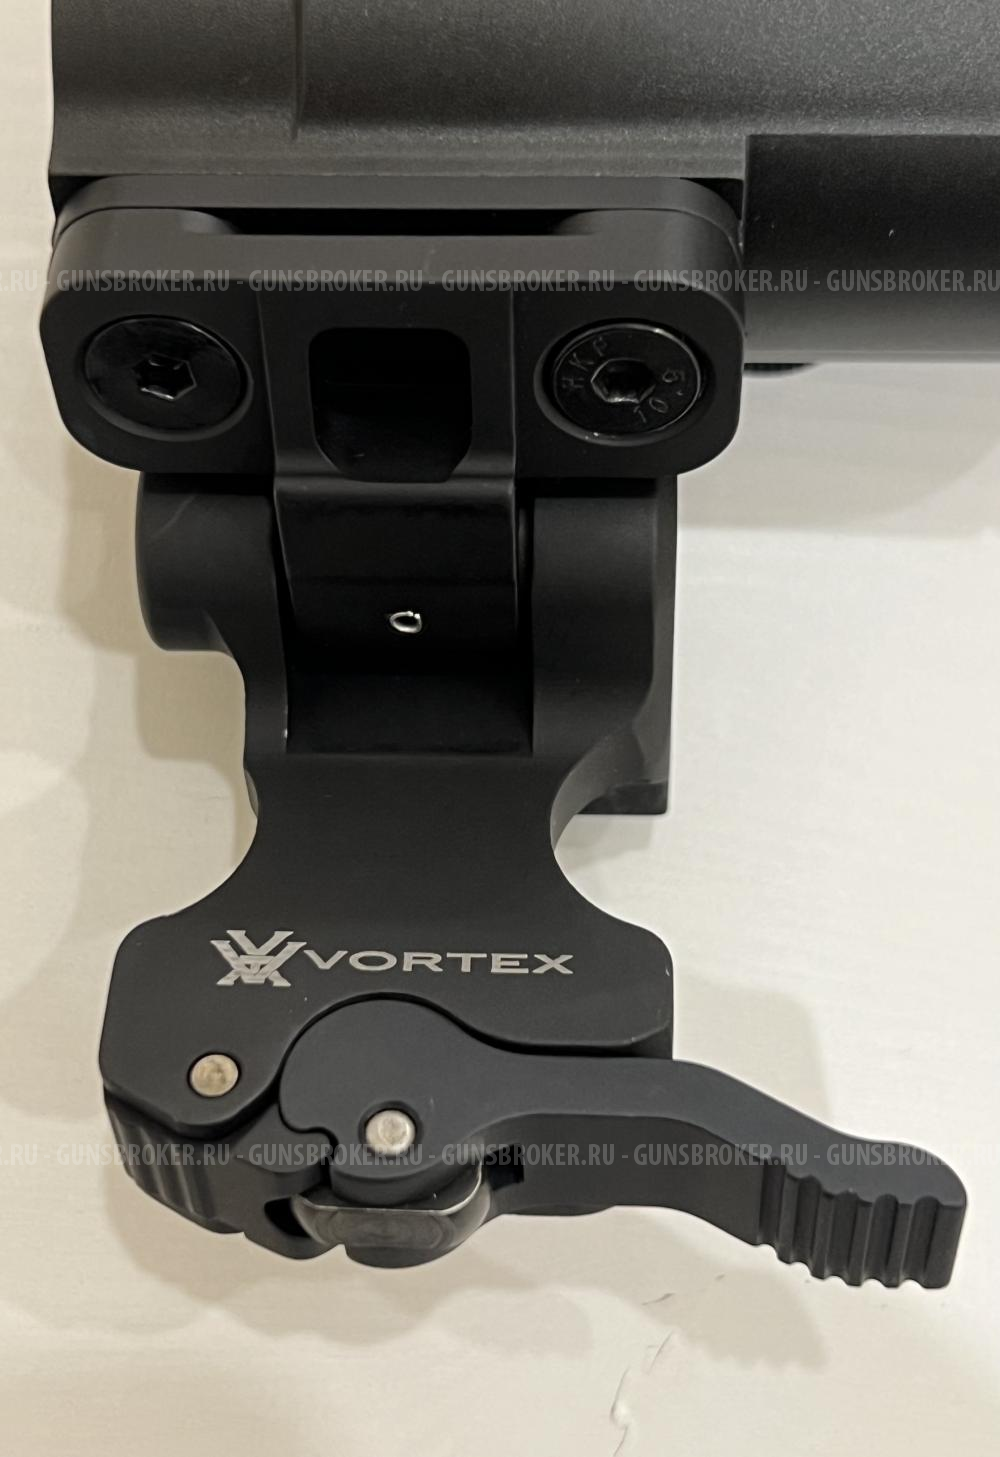 Продам магнифер (магнифаер) Vortex micro 3x